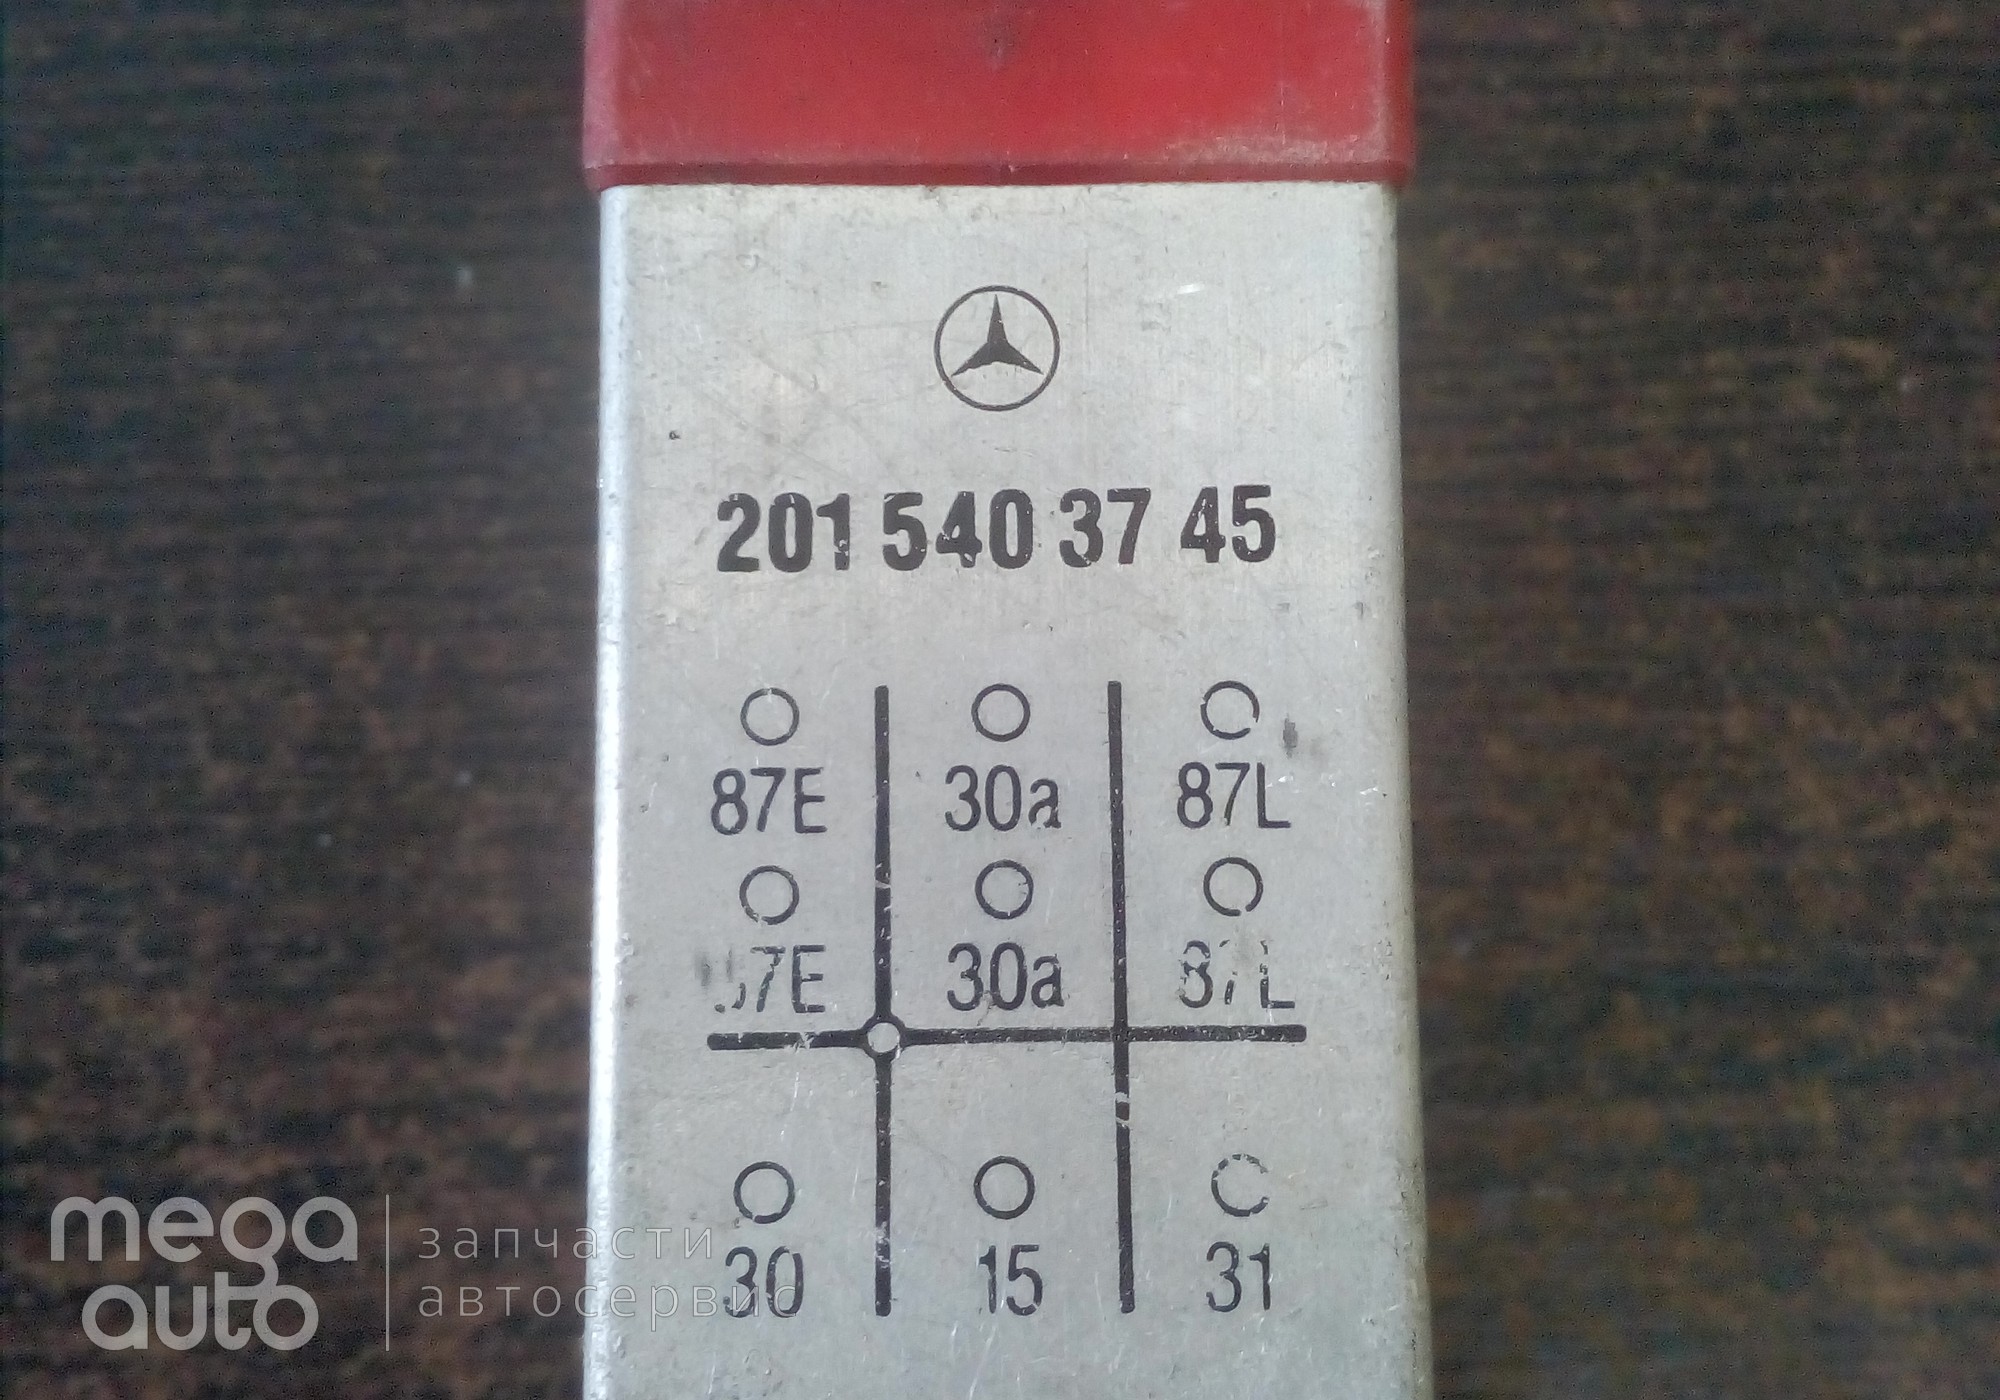 2015403745 Реле перегрузки мерседес для Mercedes-Benz 190